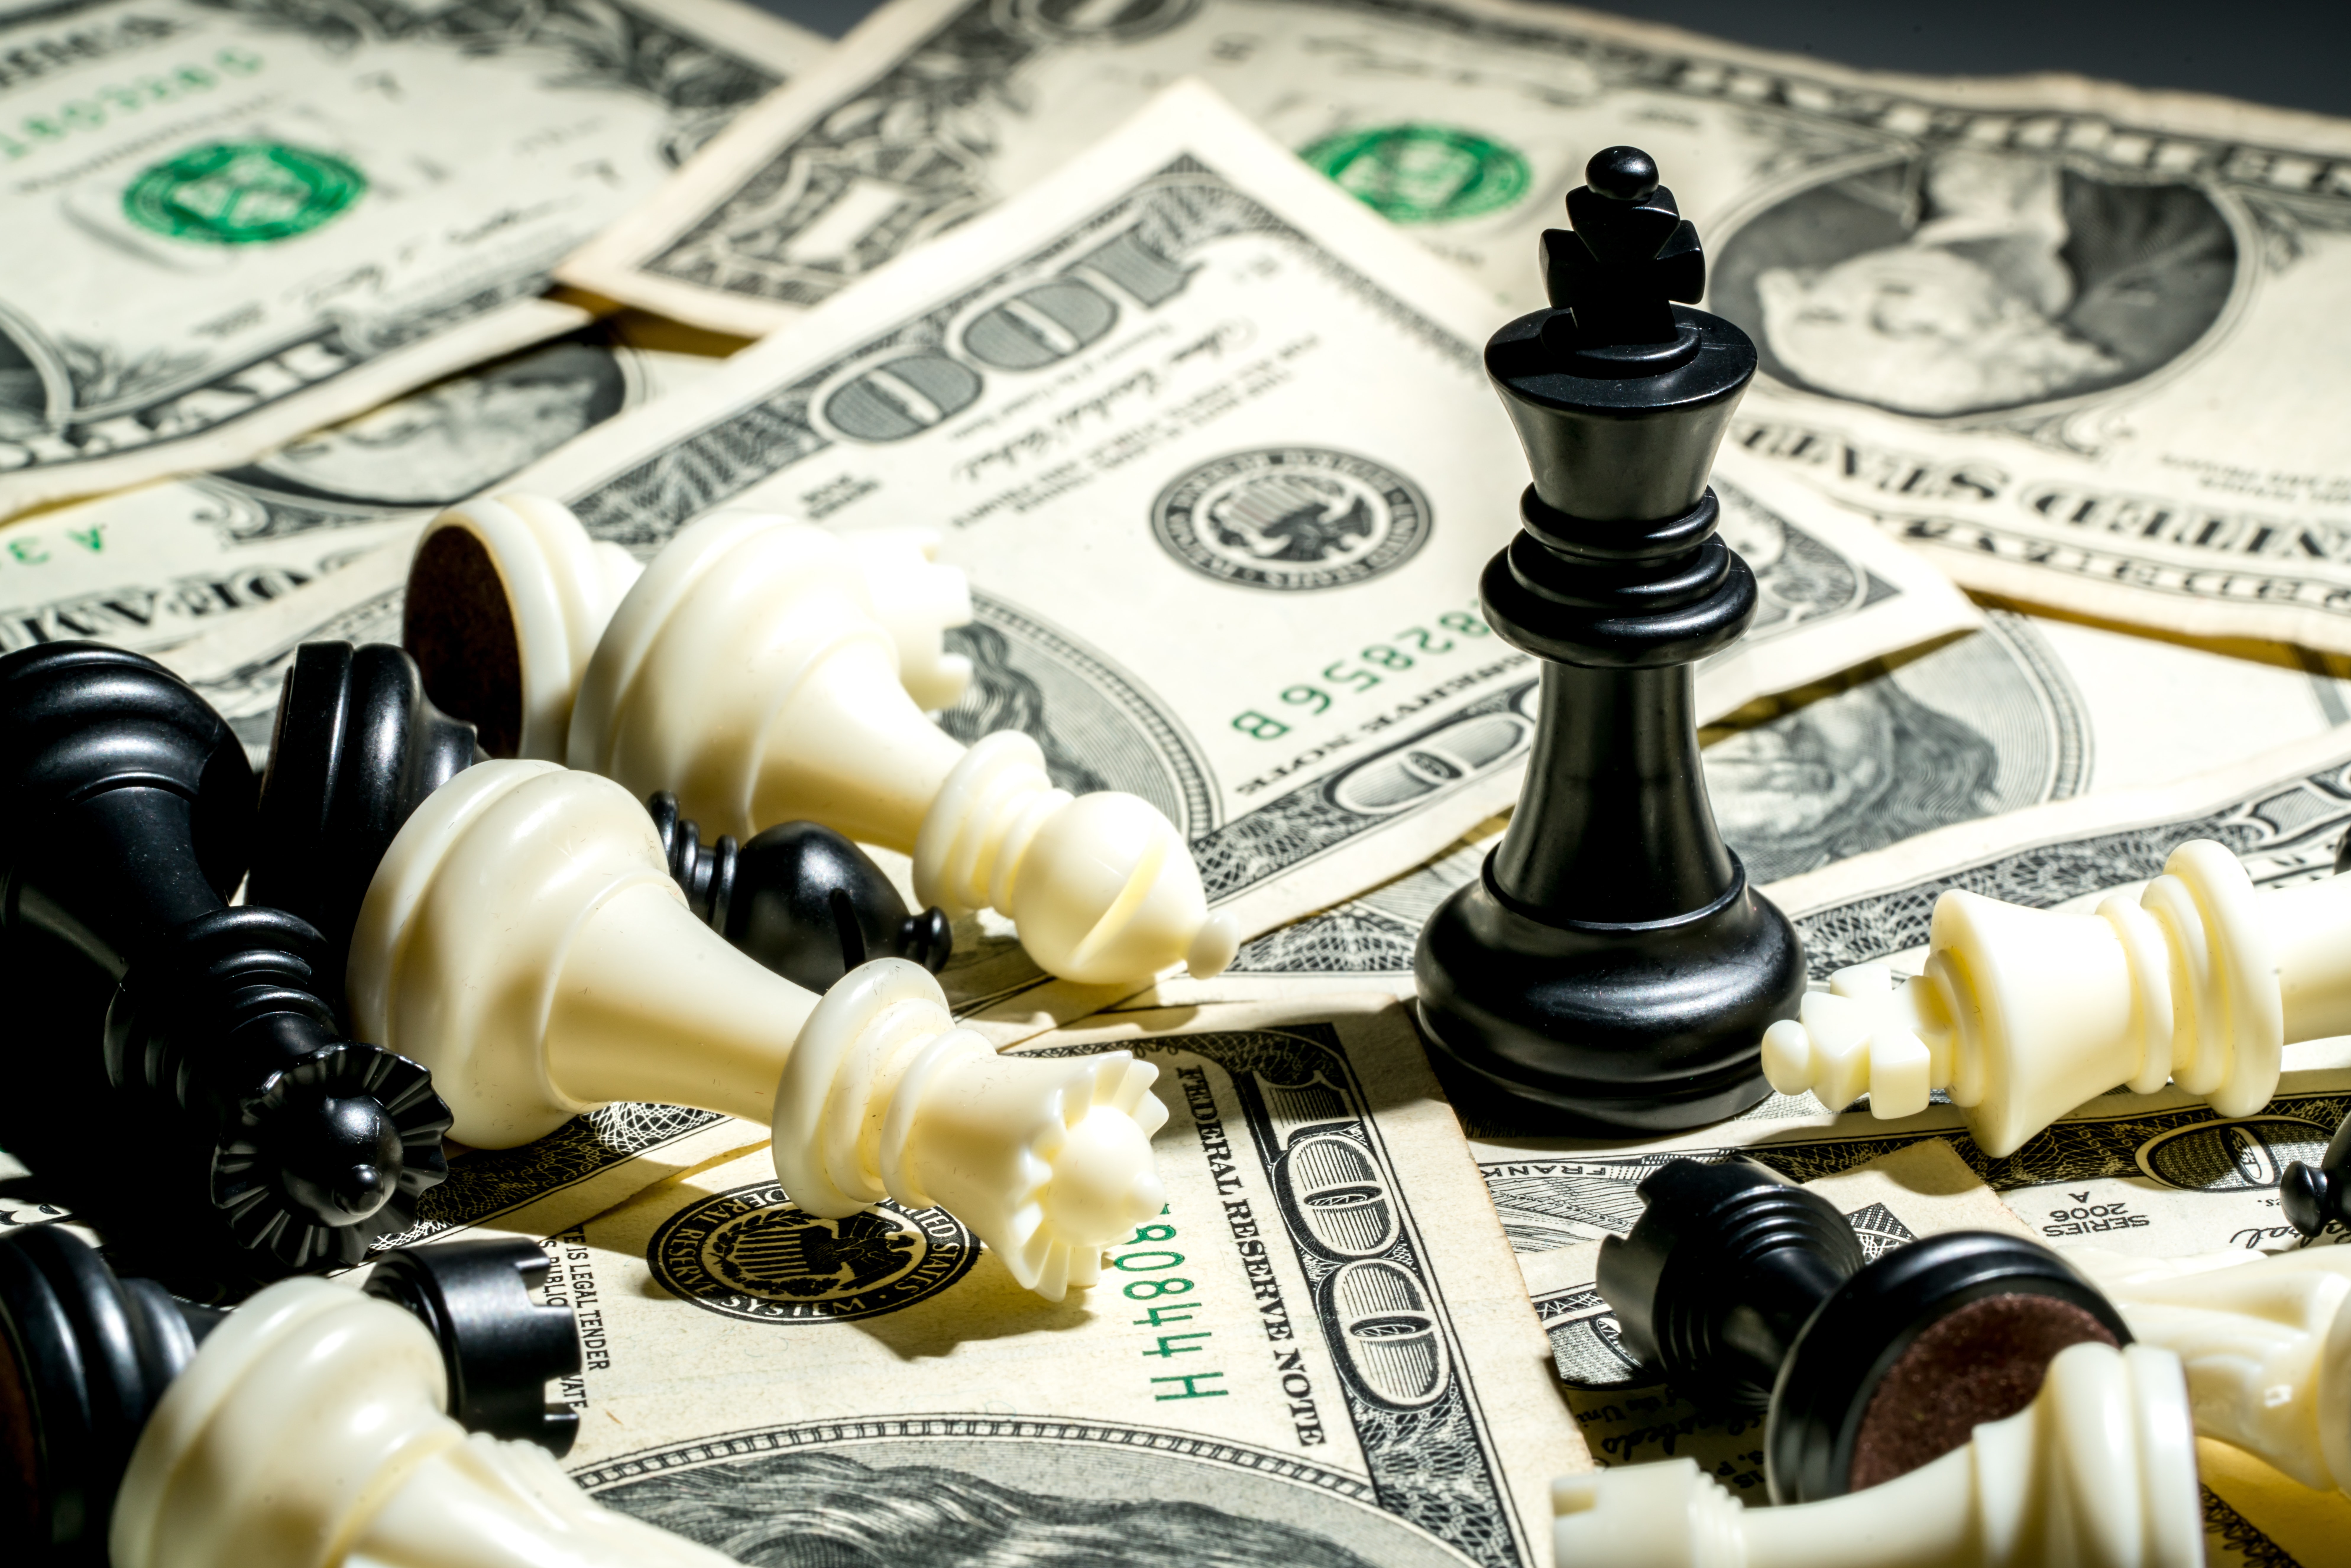 a chessboard full of money